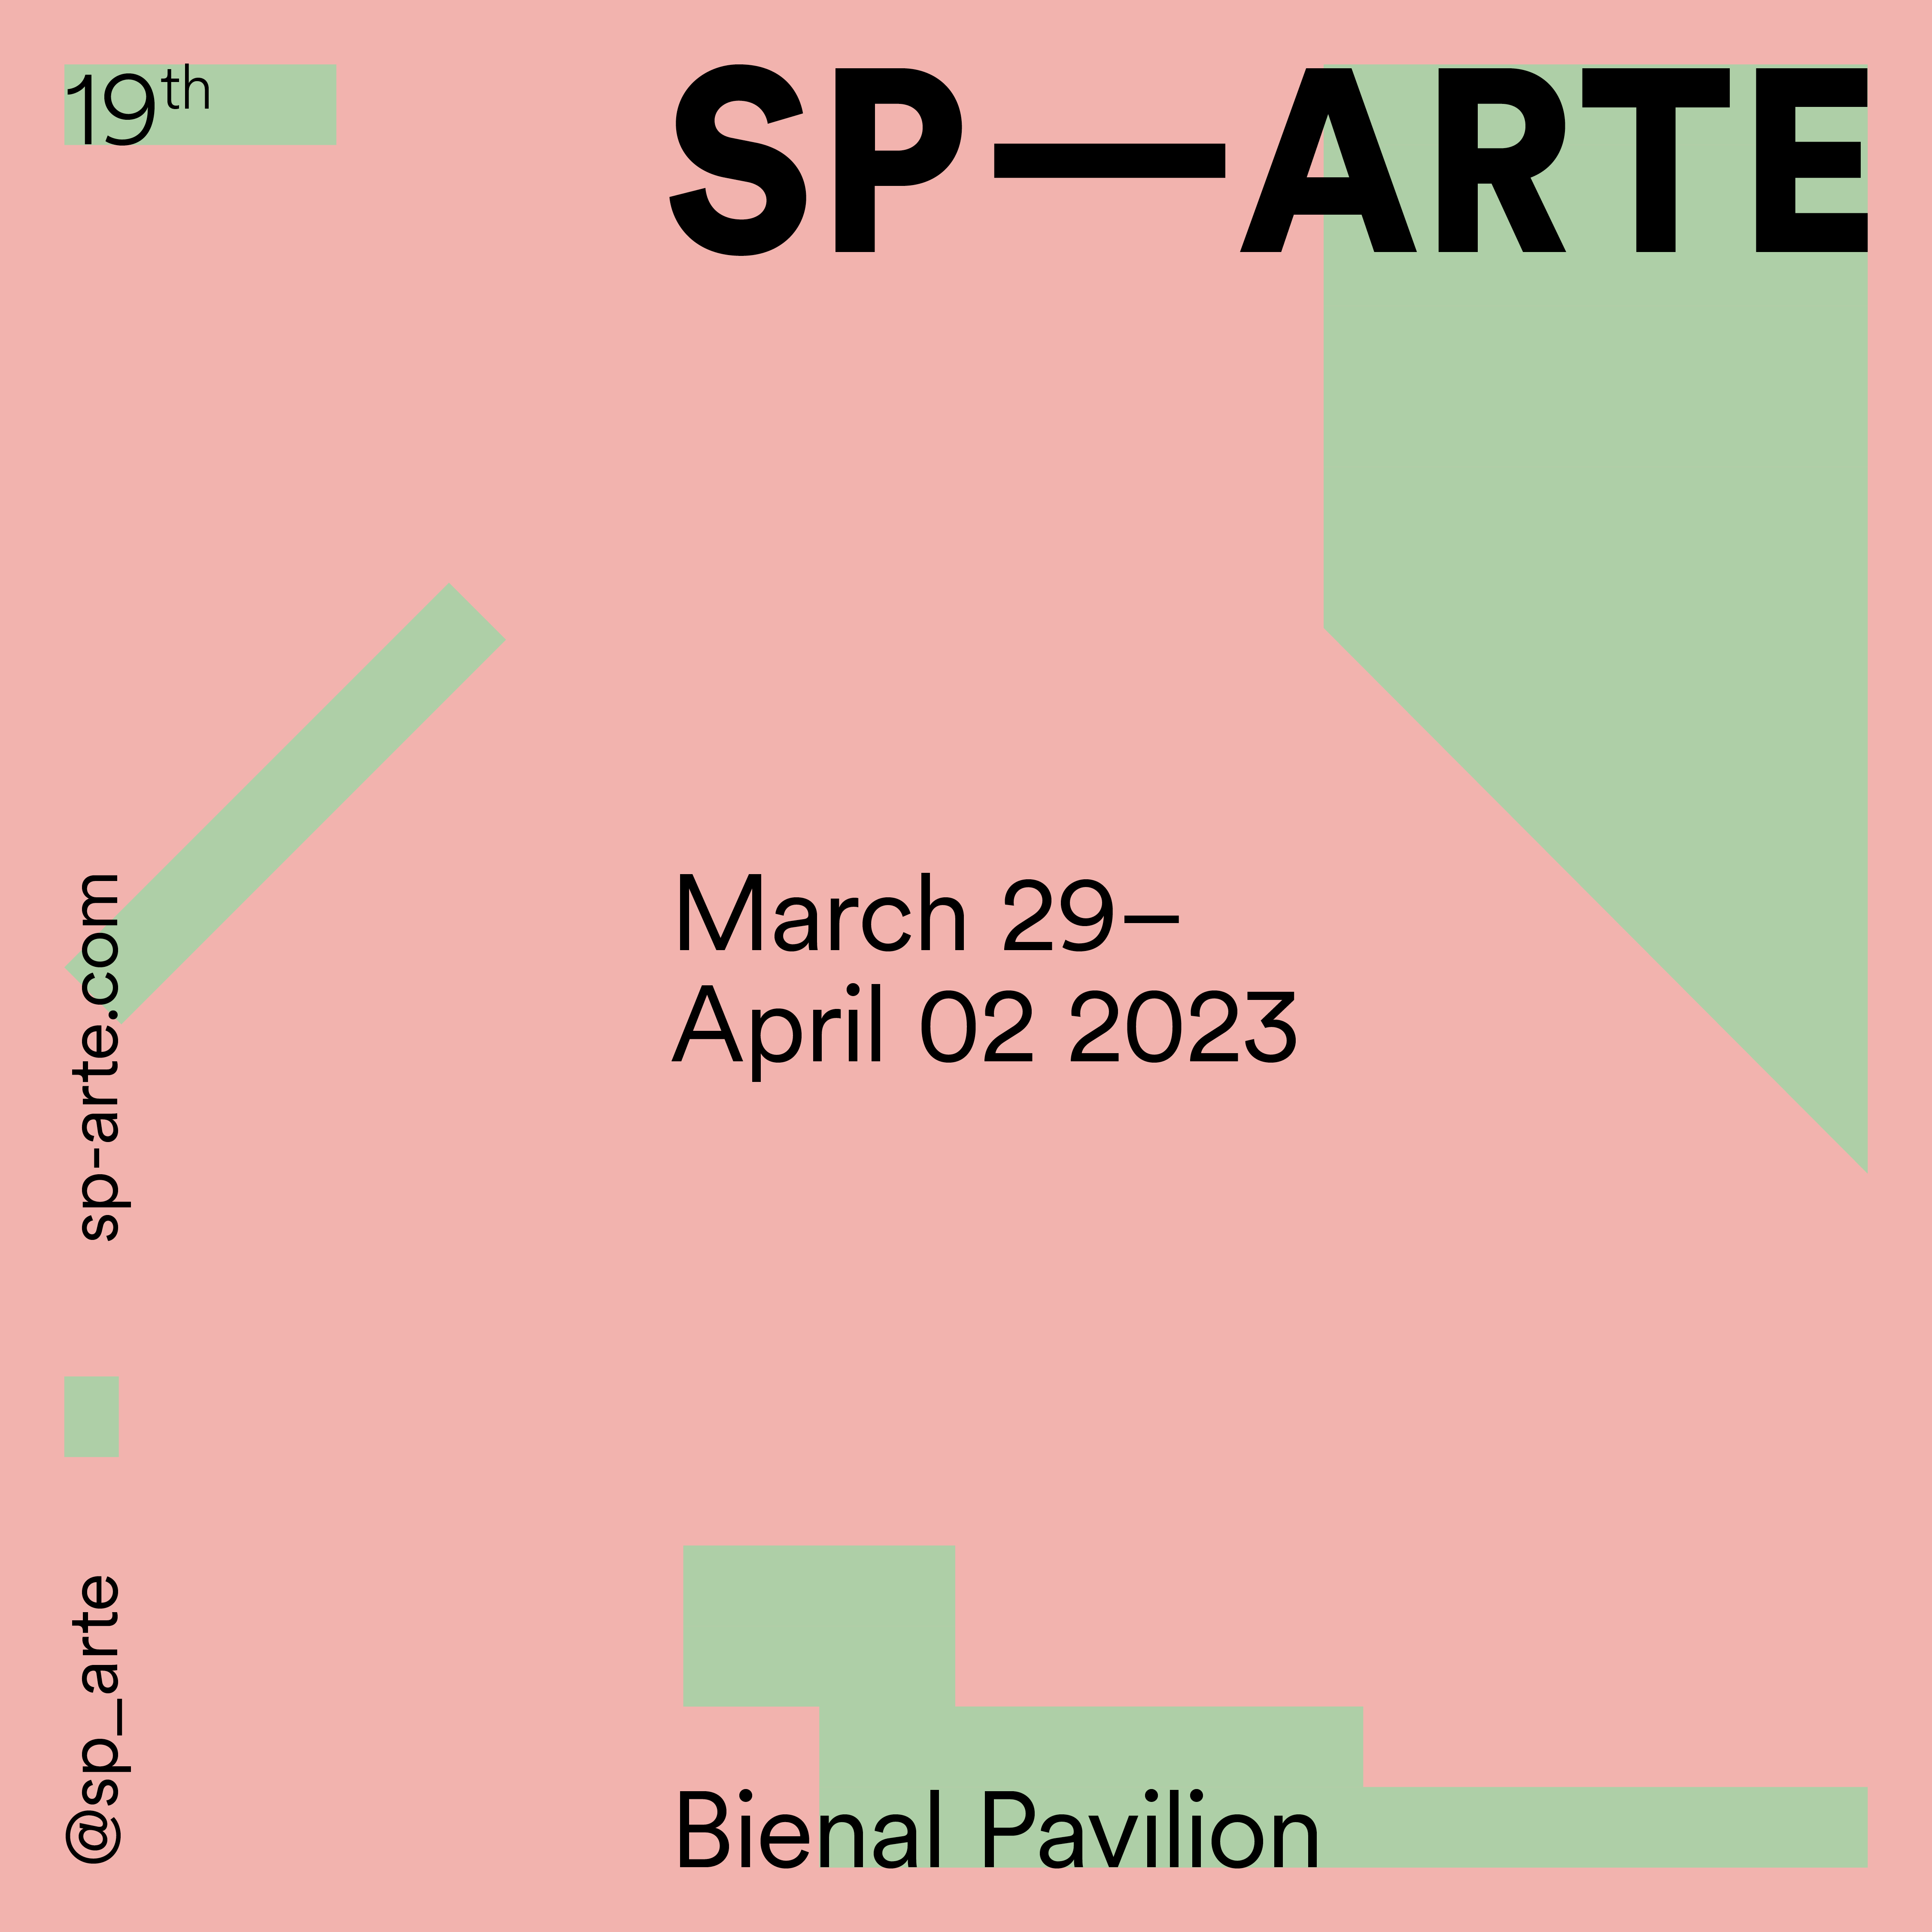 SP-ARTE Art Fair 2023